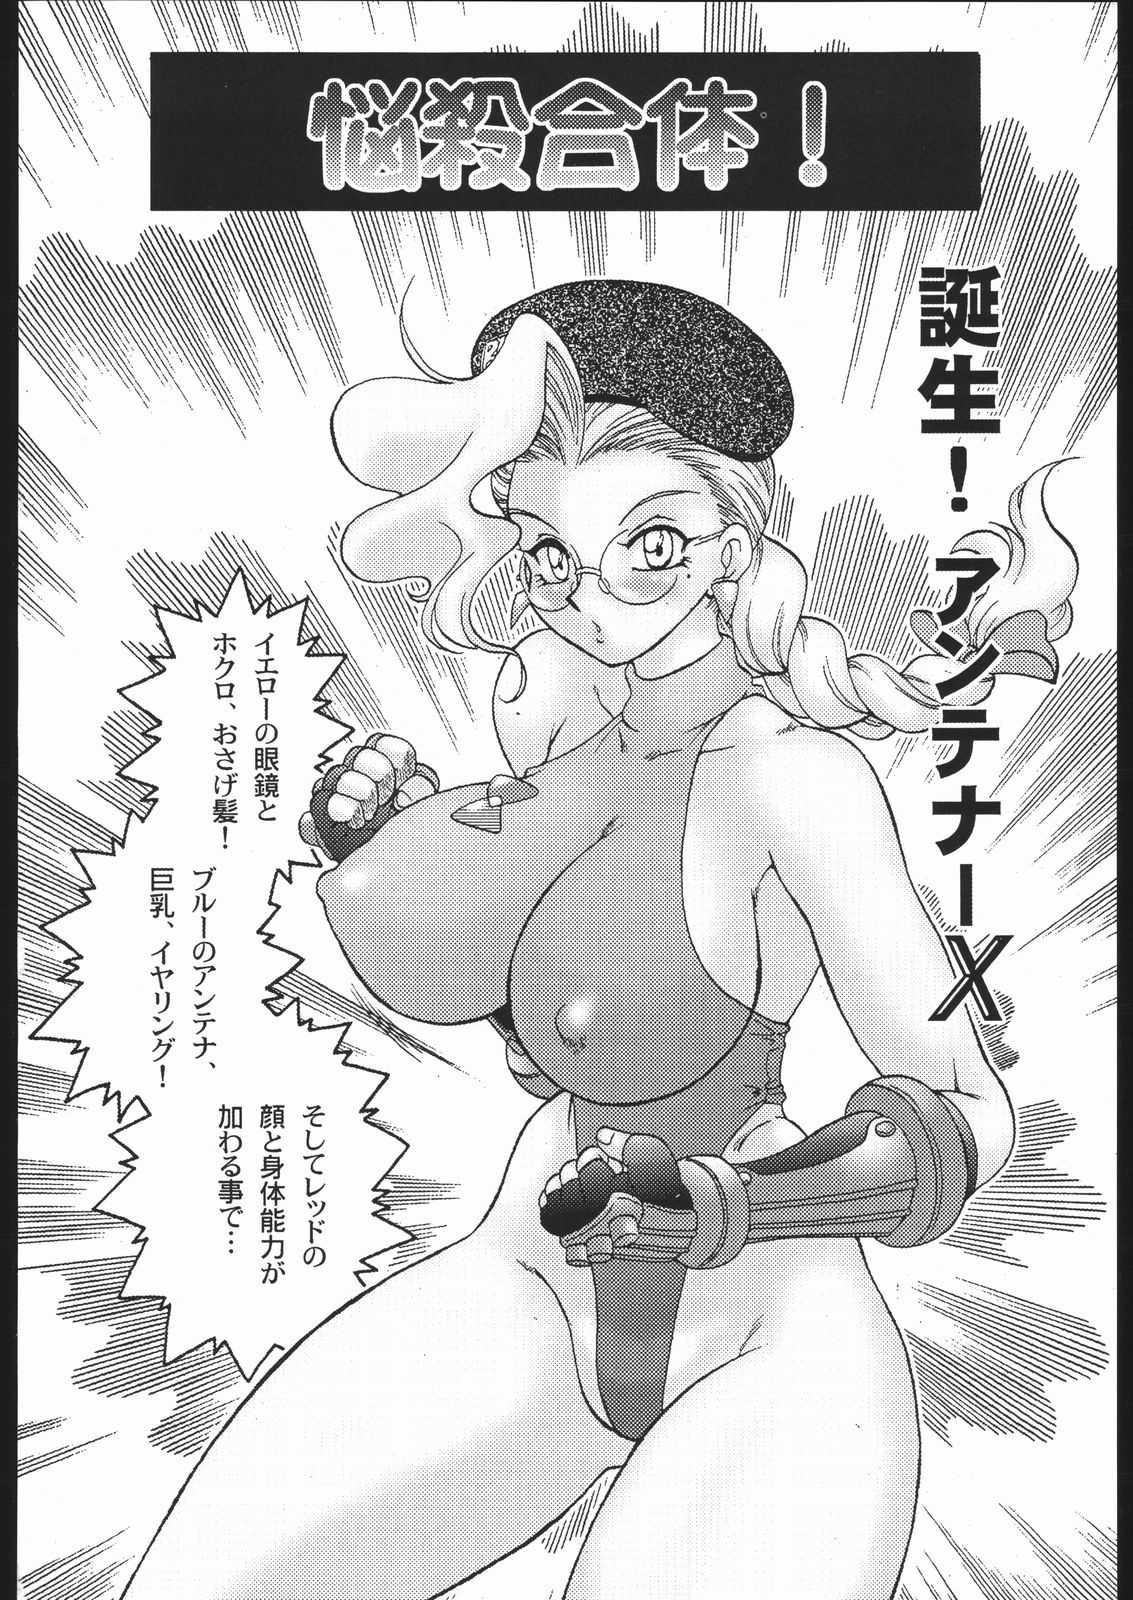 [Street Fighter] Nousatsu Sentai Blonde Antennas (Sunset Dreamer) [SUNSET DREAMER] 悩殺戦隊ブロンドアンテナーズ